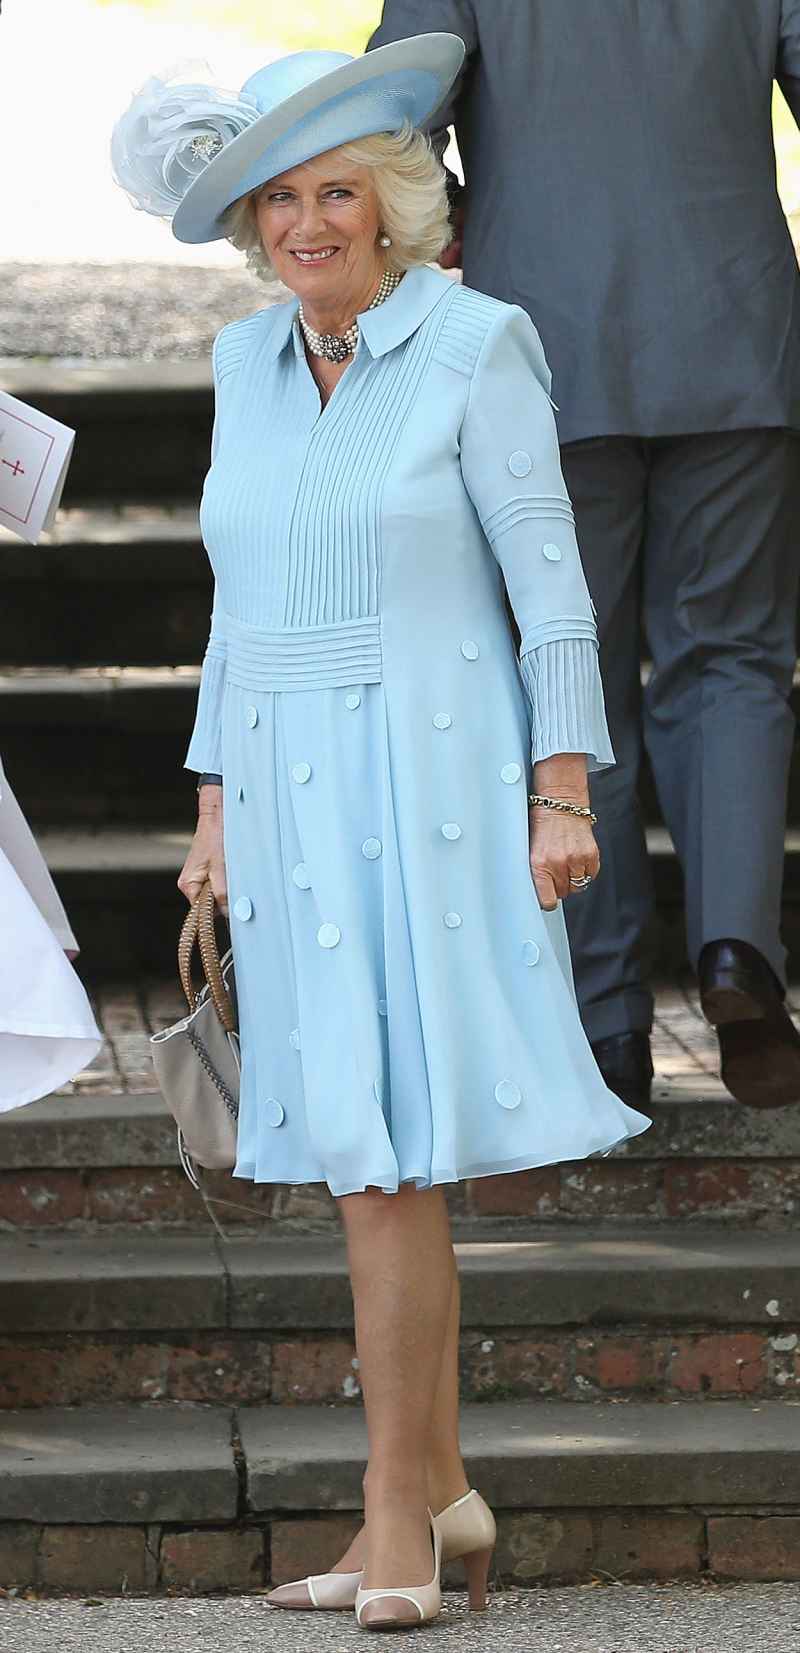 Camilla Duchess of Cornwall's Style - July 5, 2015